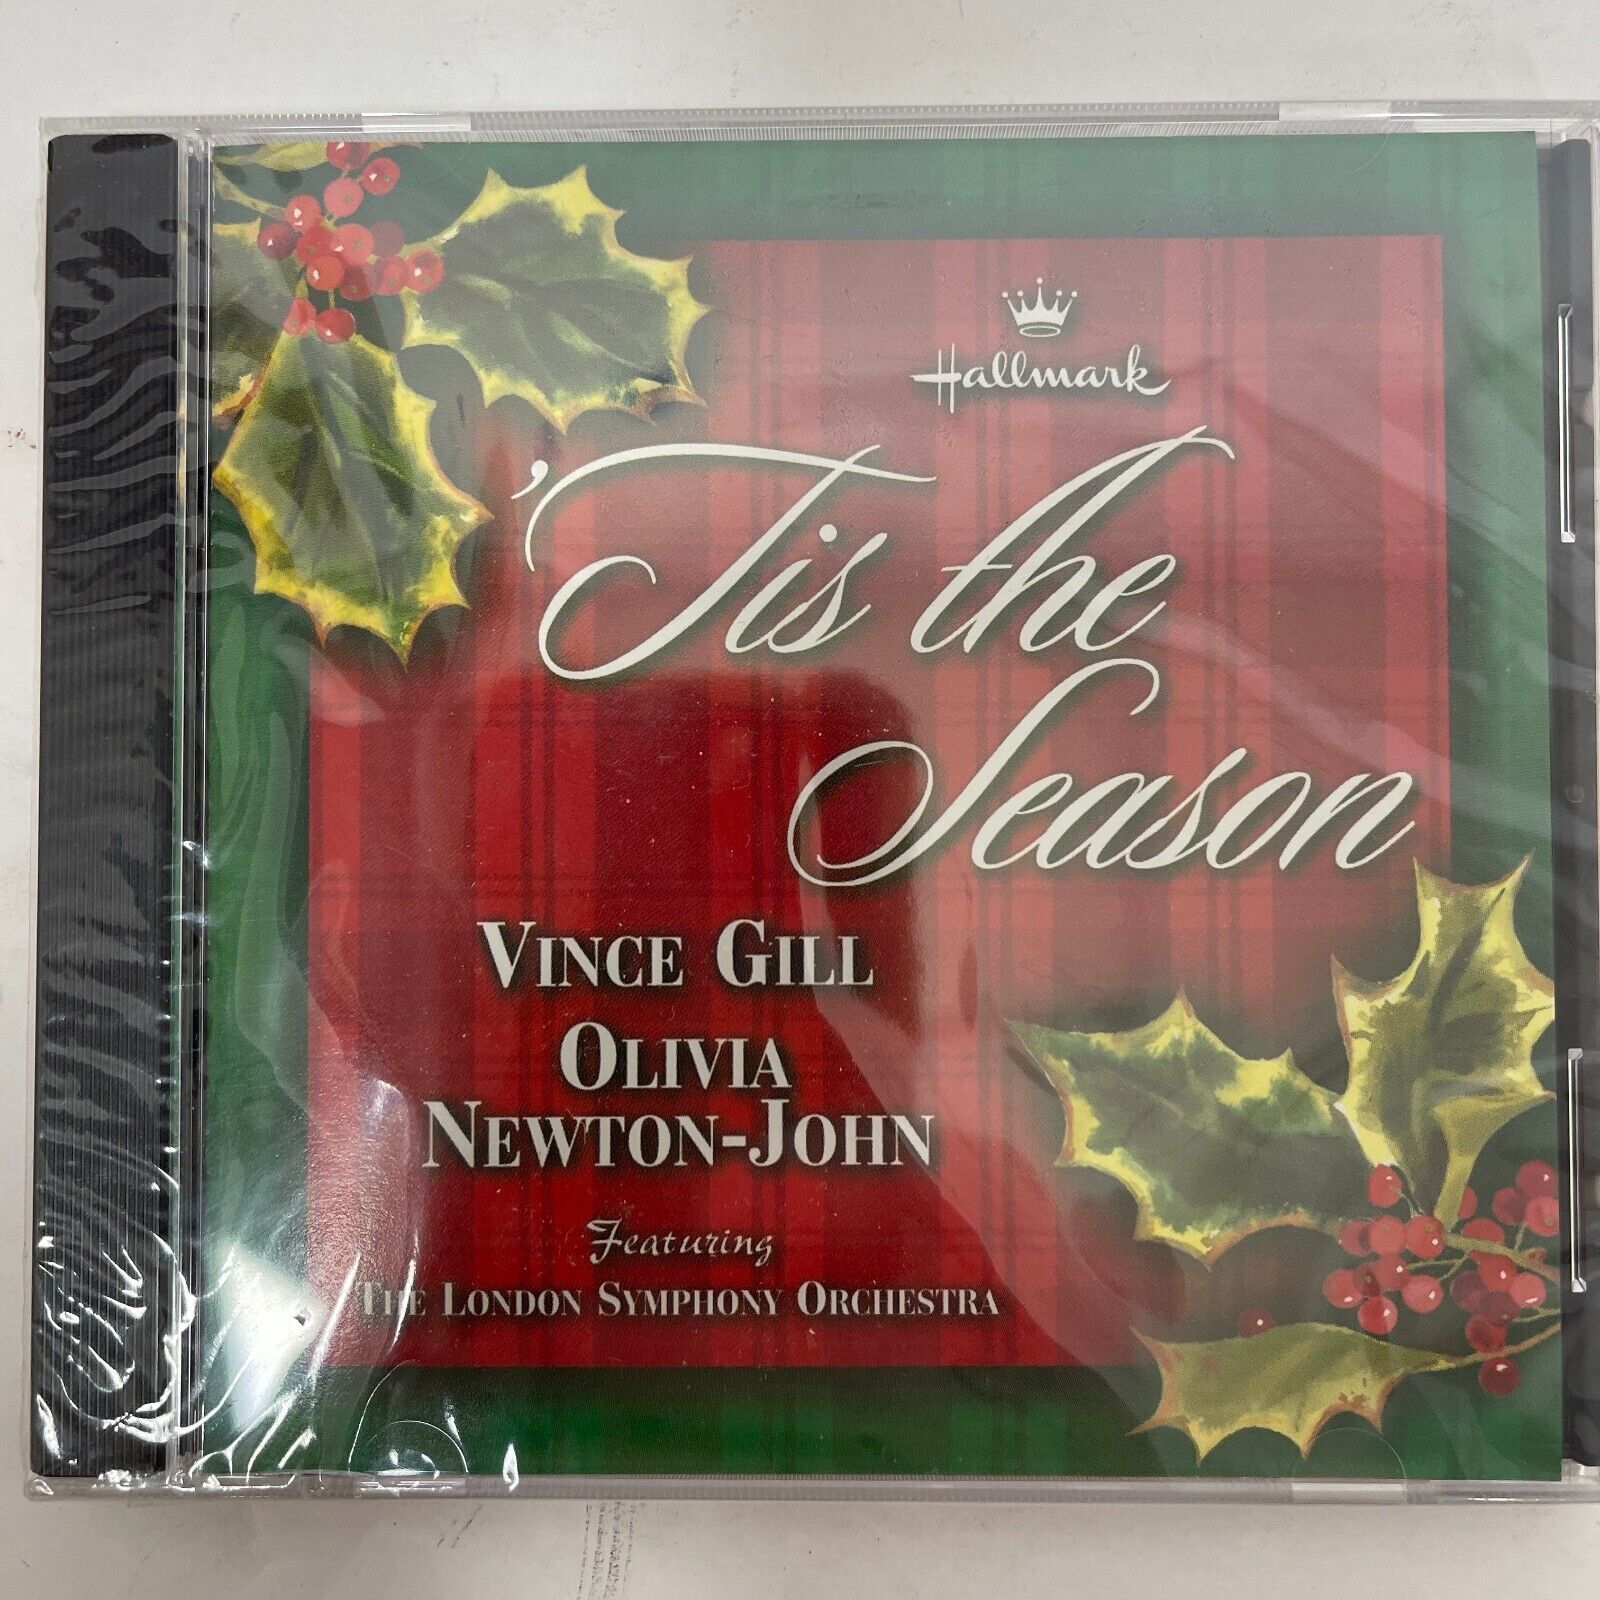 Hallmark - Tis The Season by Vince Gill and Olivia Newton-John (CD, 2000)